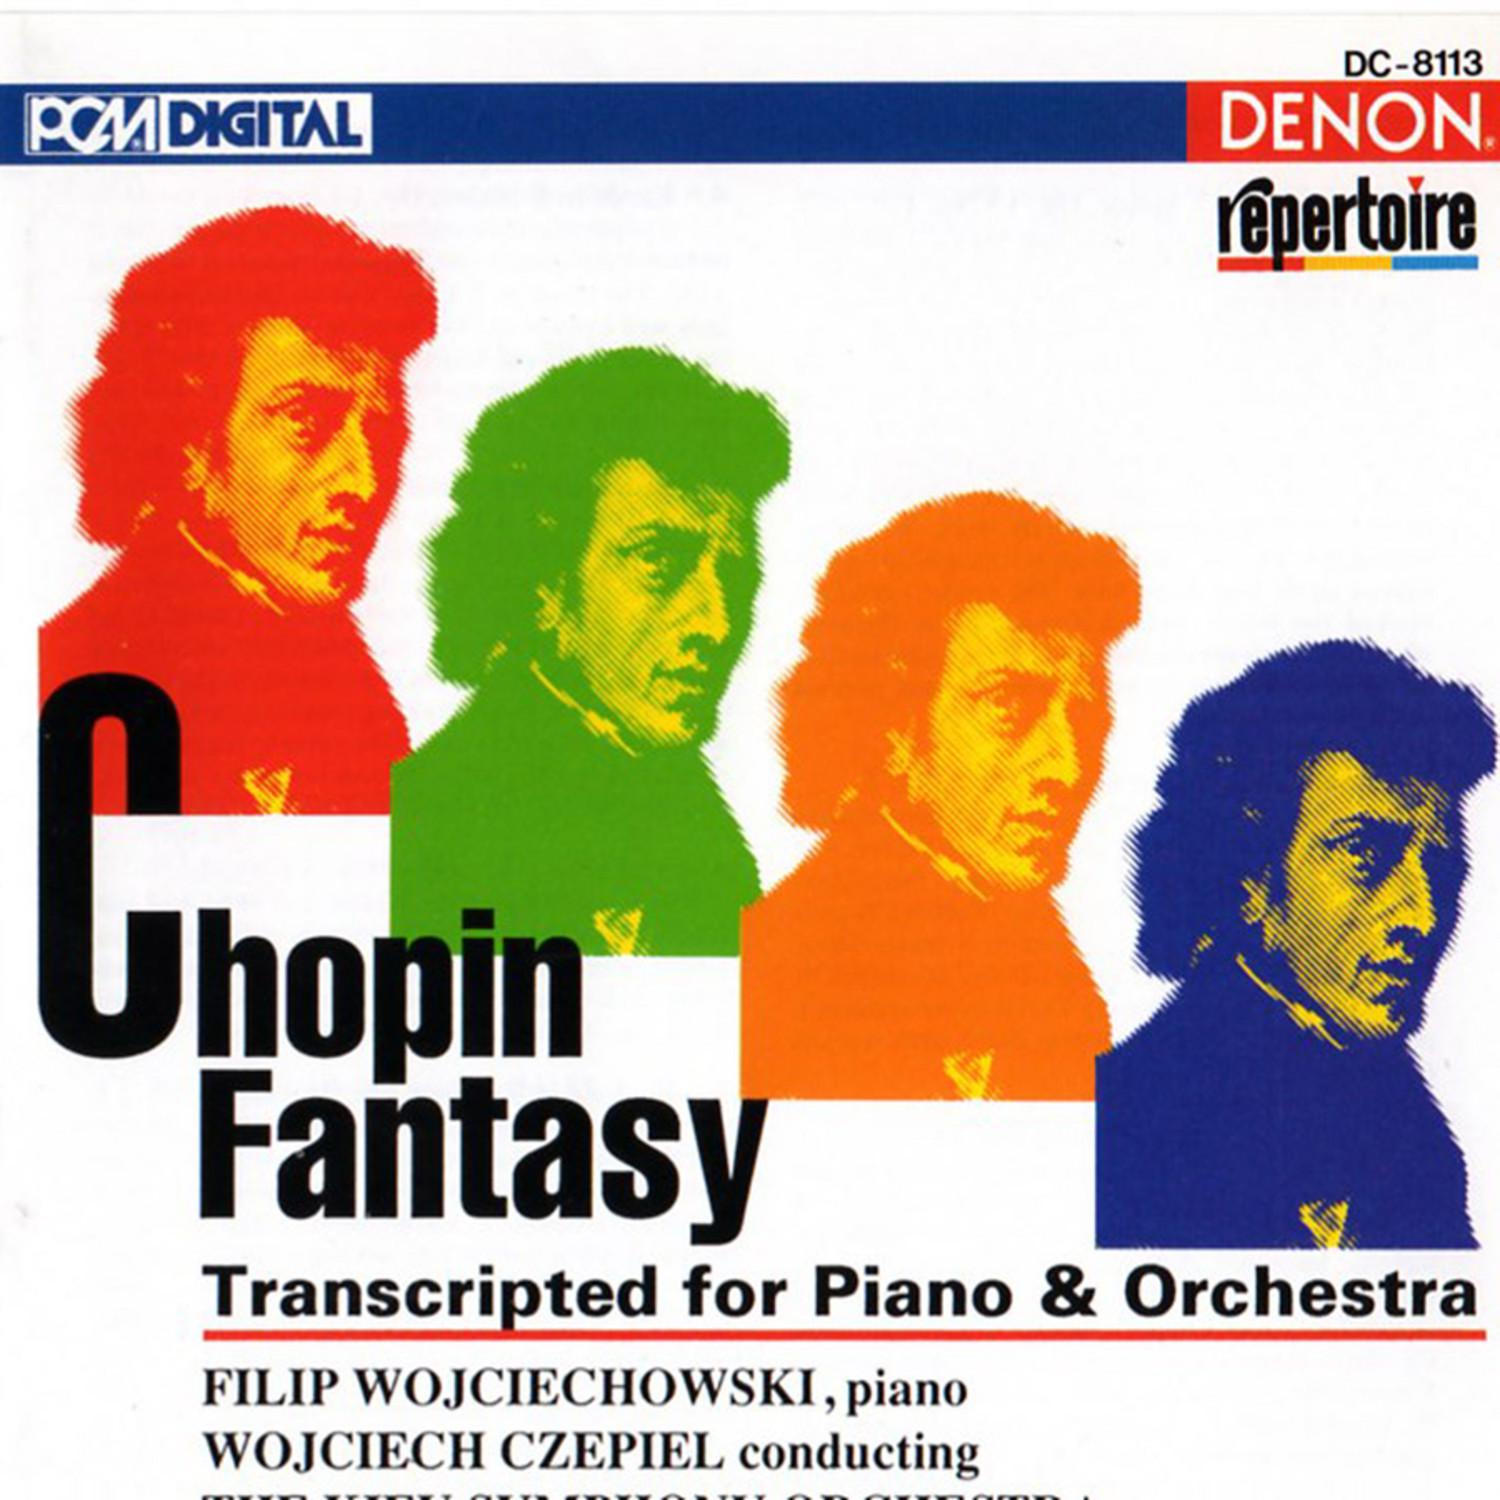 Chopin: Fantasy - Transcripted for Piano & Orchestra